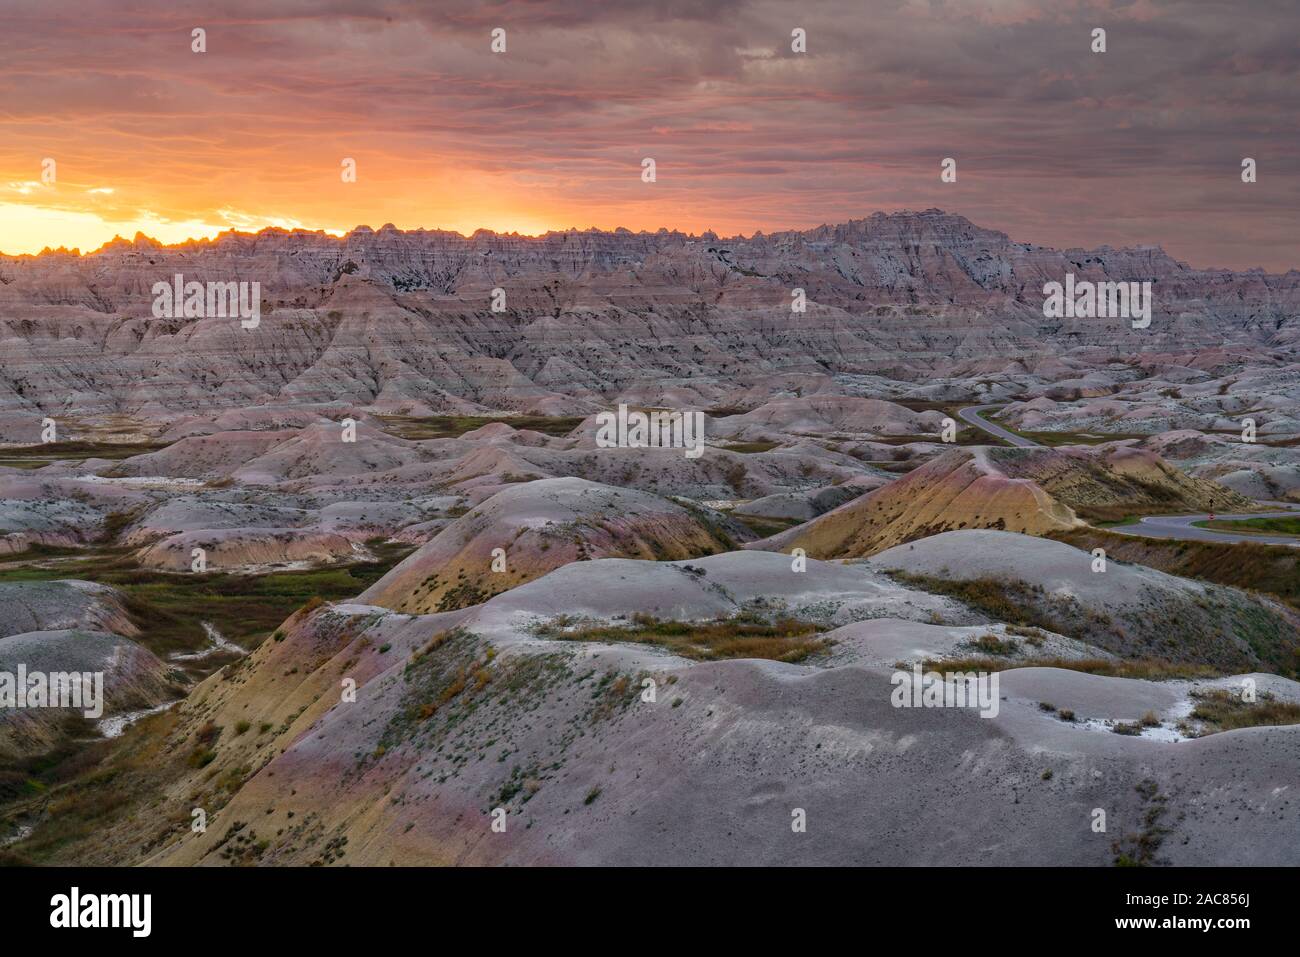 Badlands National Park landscape at Sunset in South Dakota Stock Photo